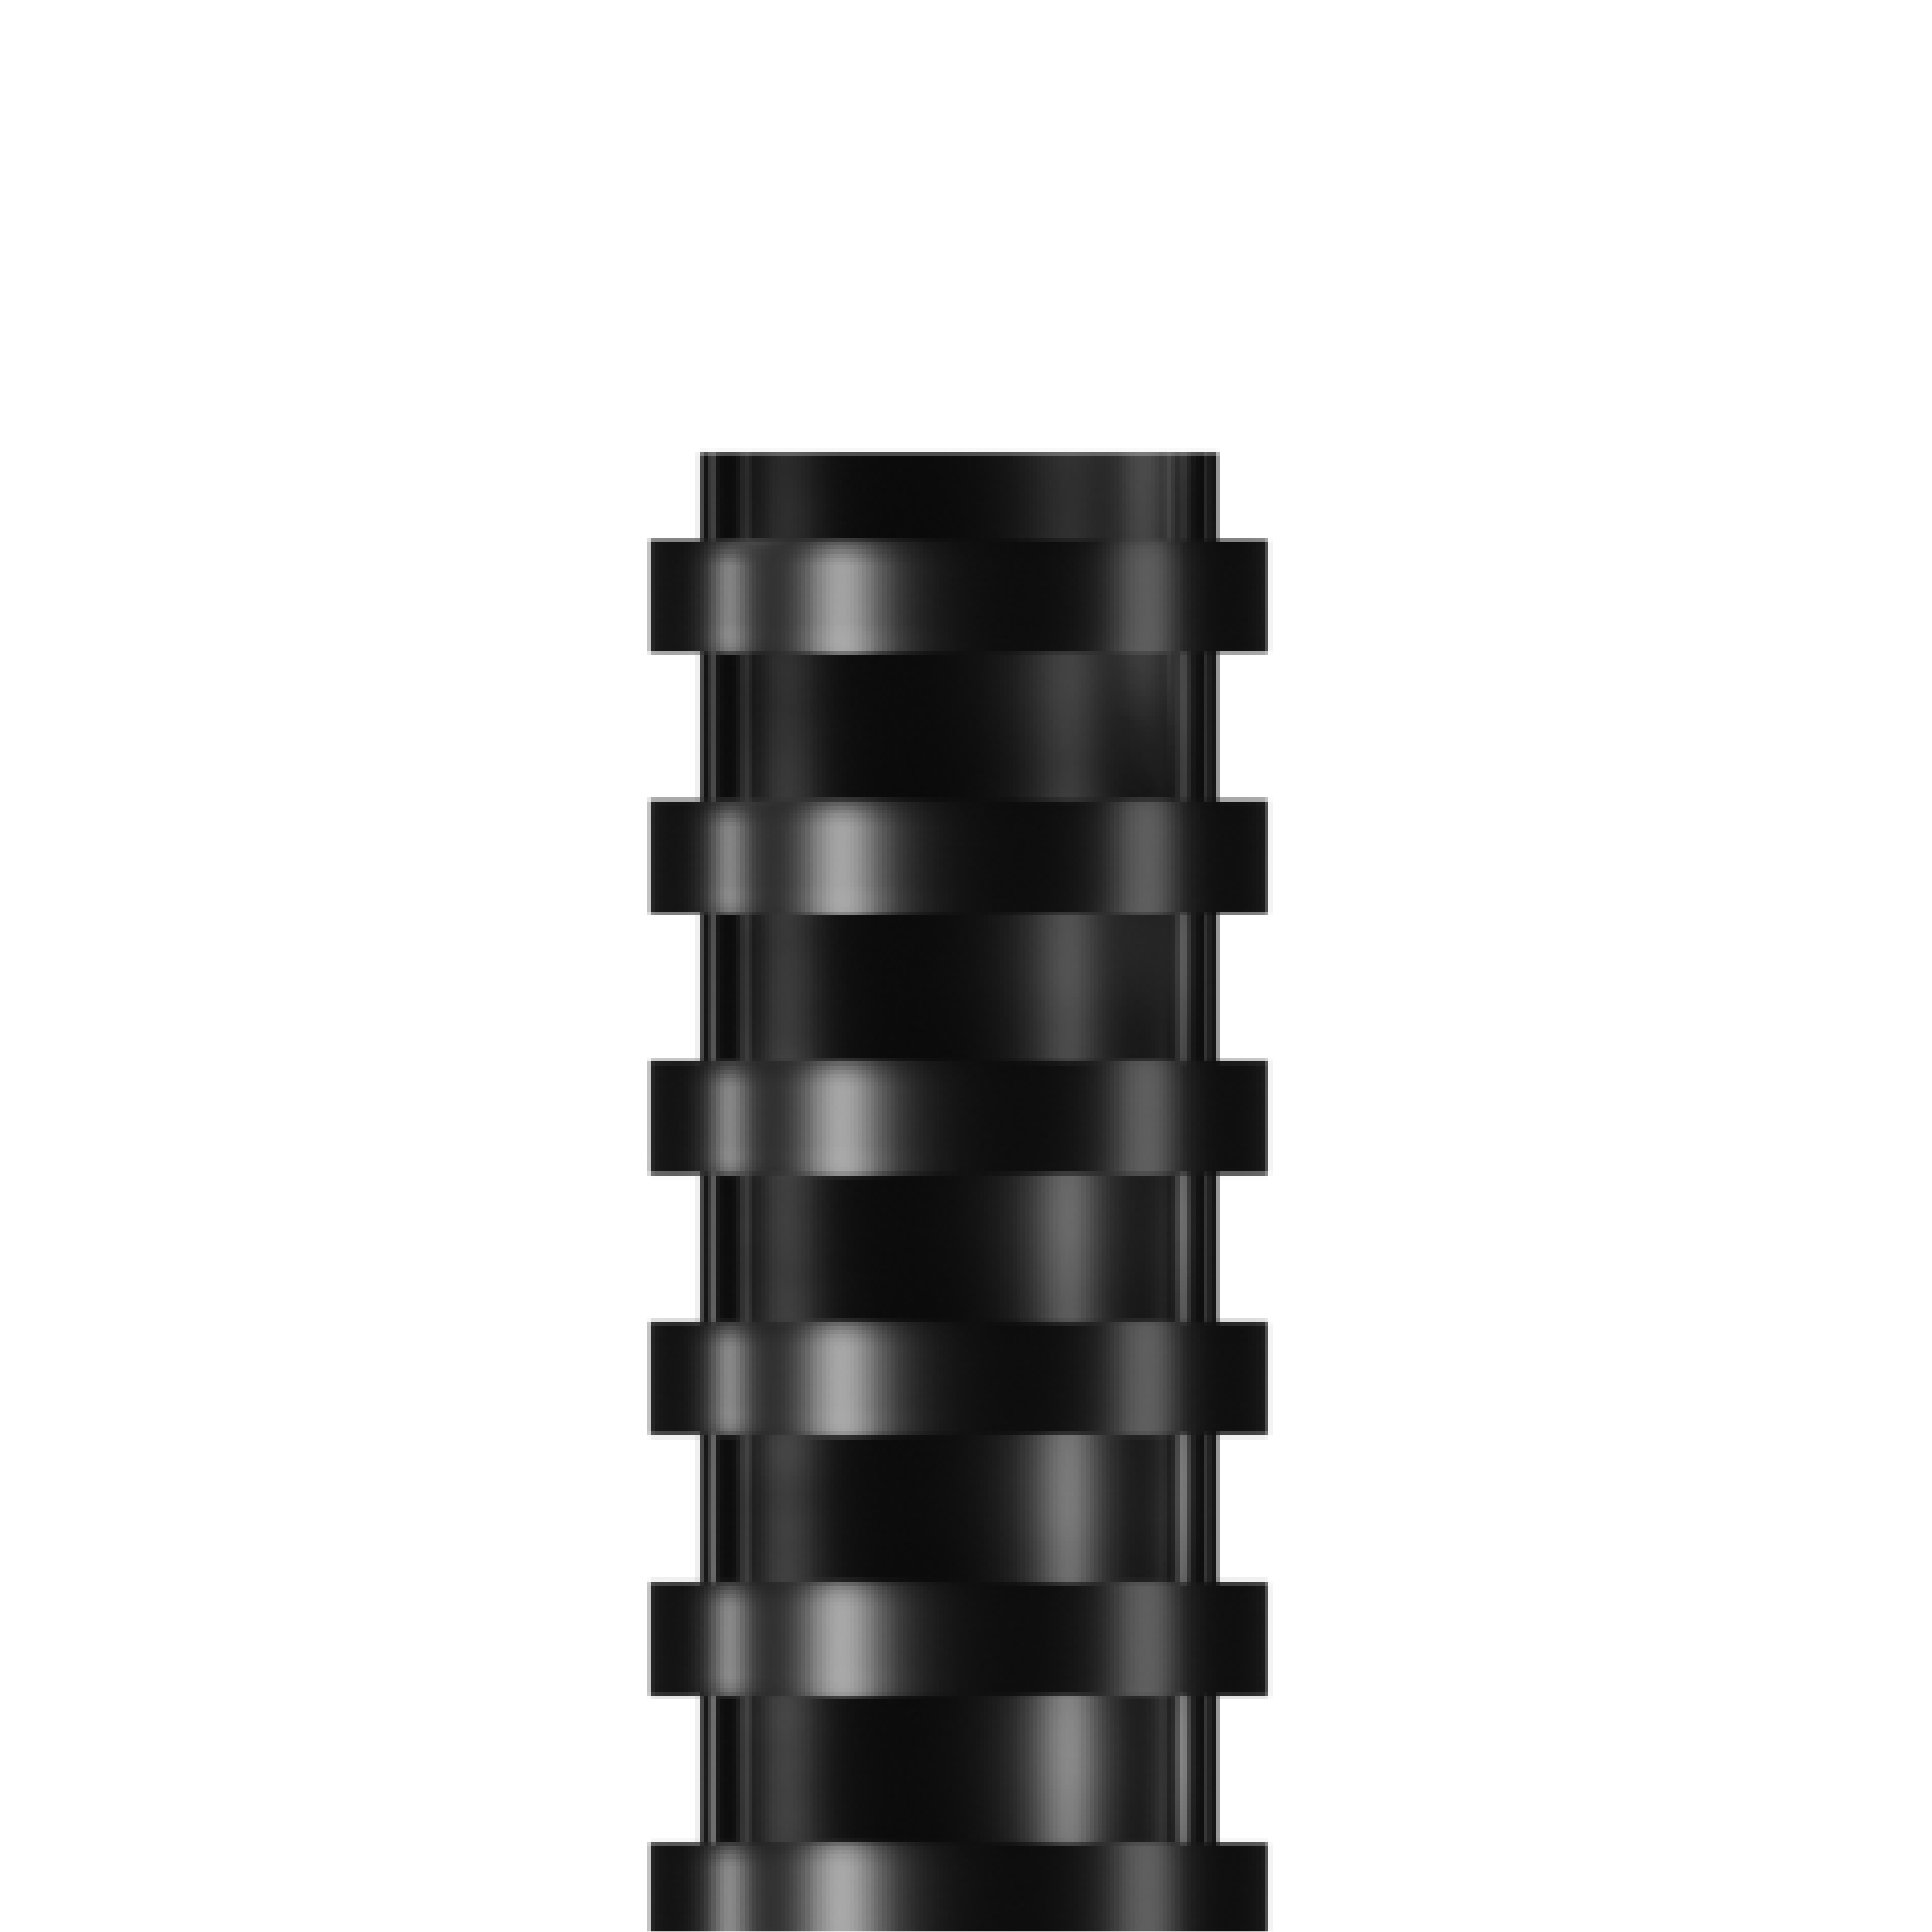 RAADO 32mm Plastic Spiral Binding Comb, Black